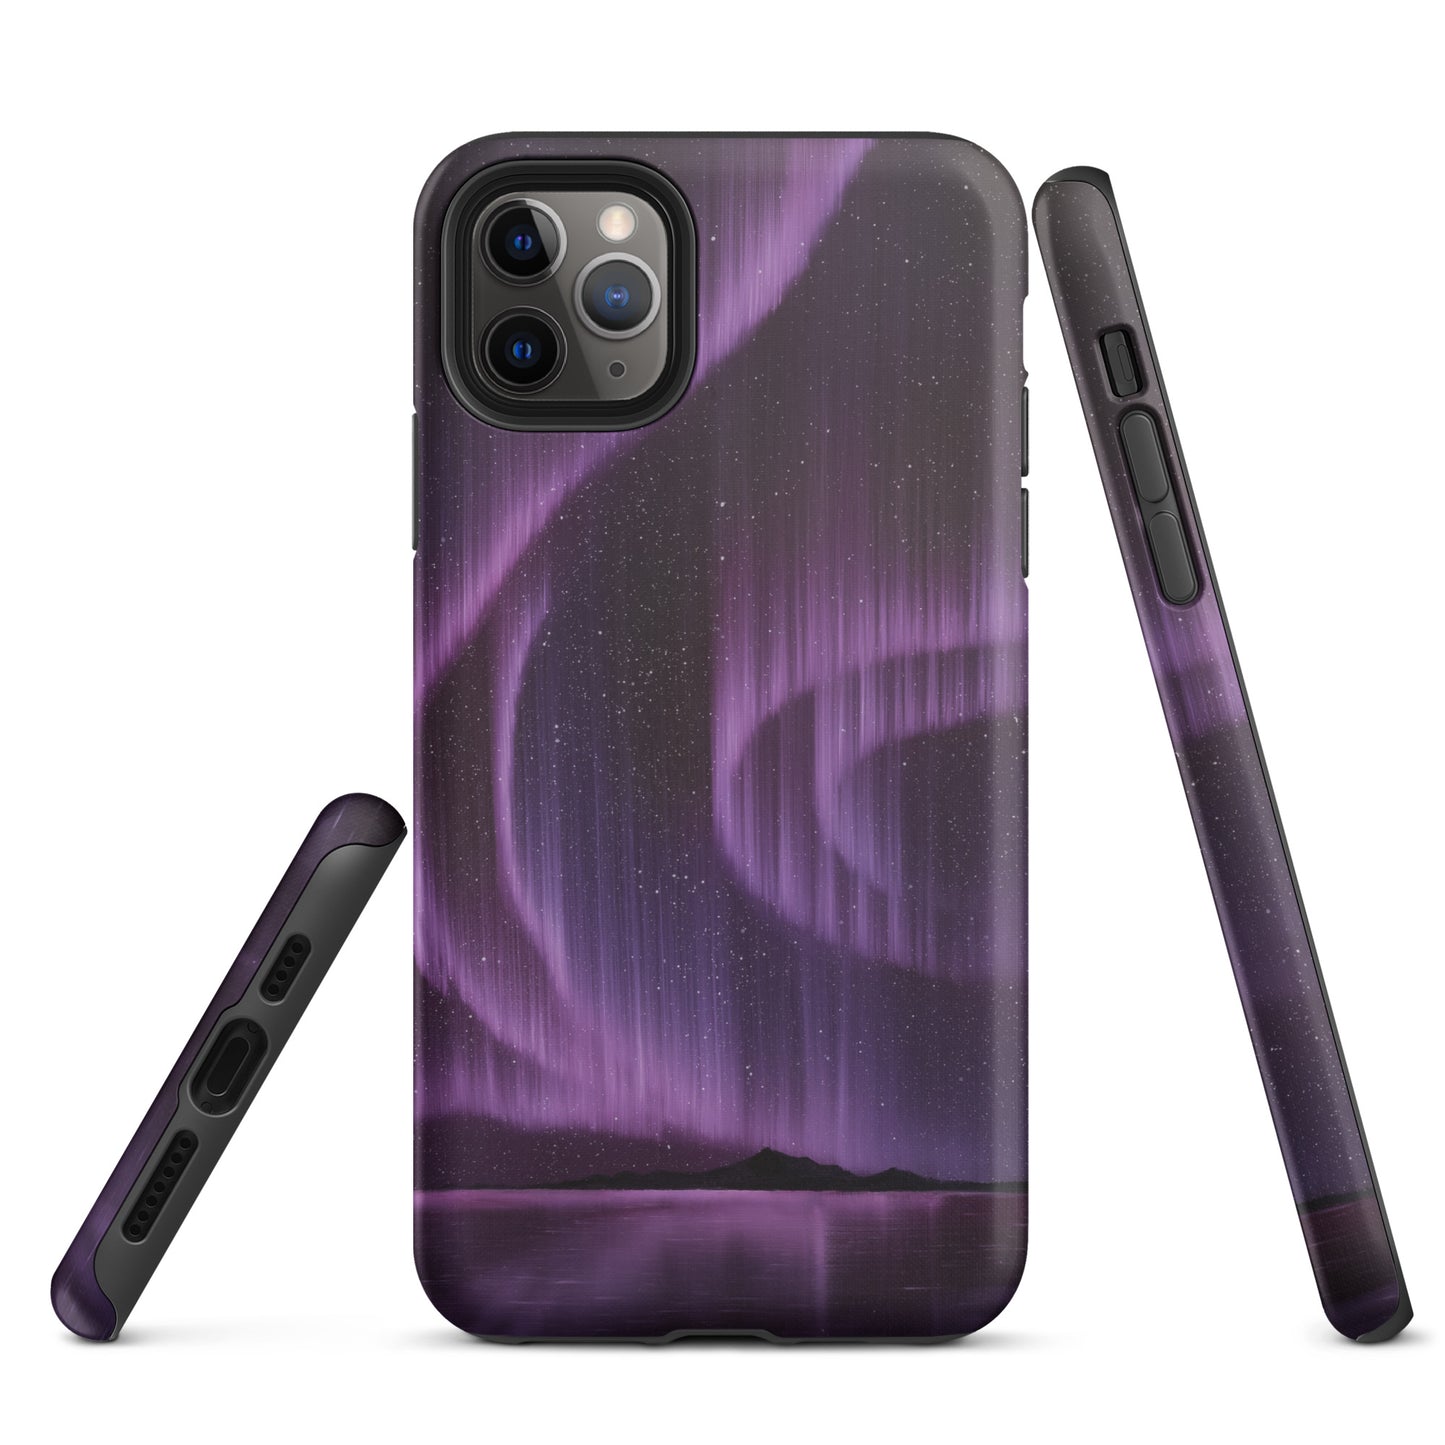 Lavender Dream Tough iPhone case